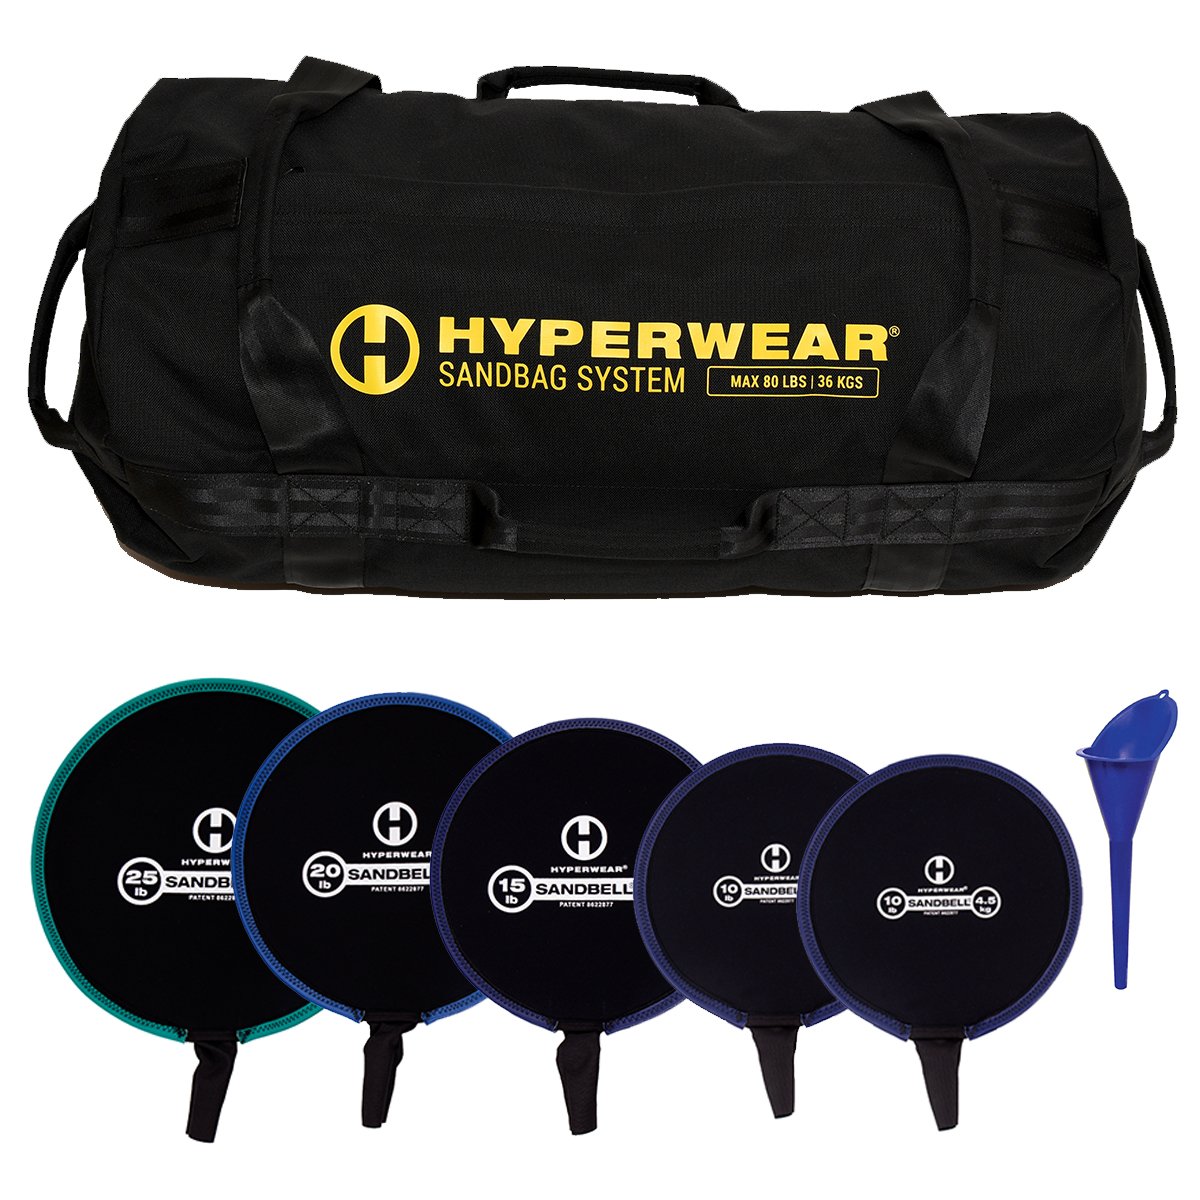 HyperwearHyperwear Workout Sandbags SandBell SystemSandbag